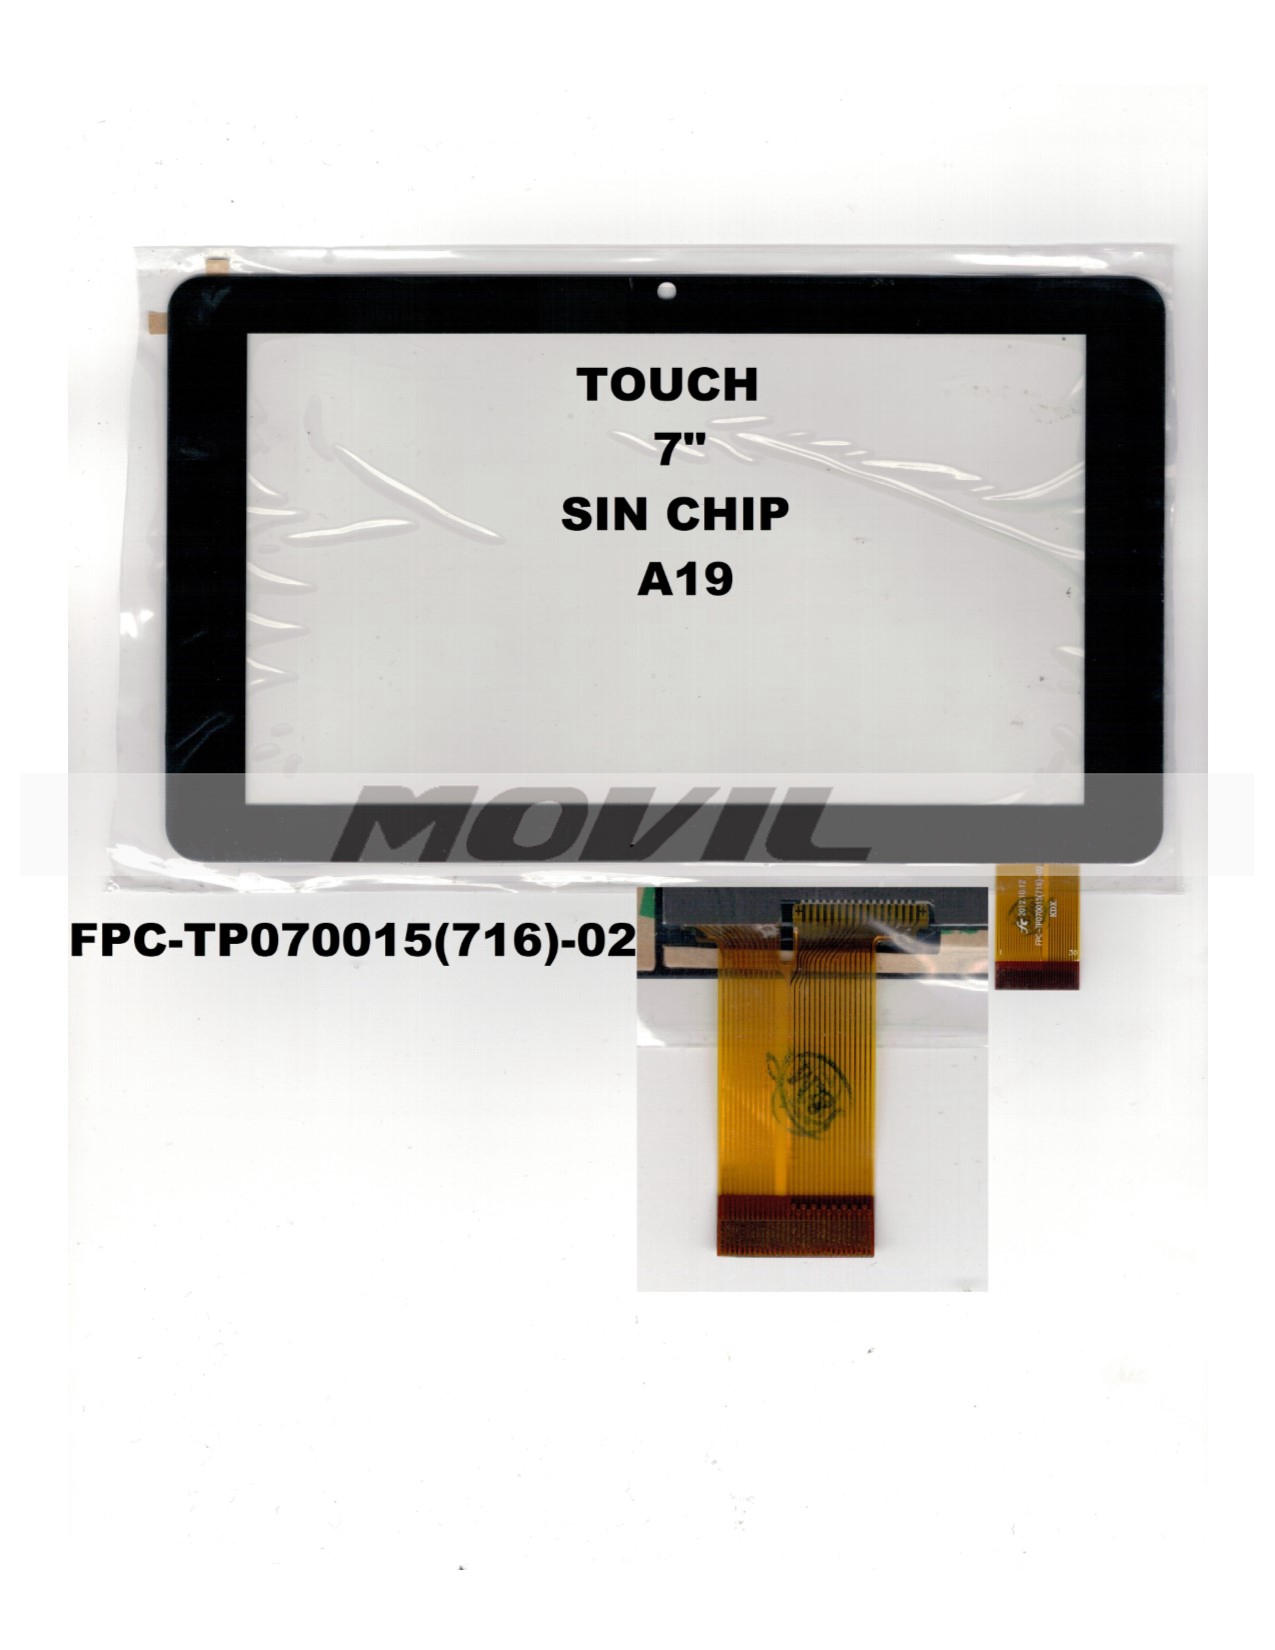 Touch tactil para tablet flex 7 inch SIN CHIP A19 FPC-TP070015(716)-02